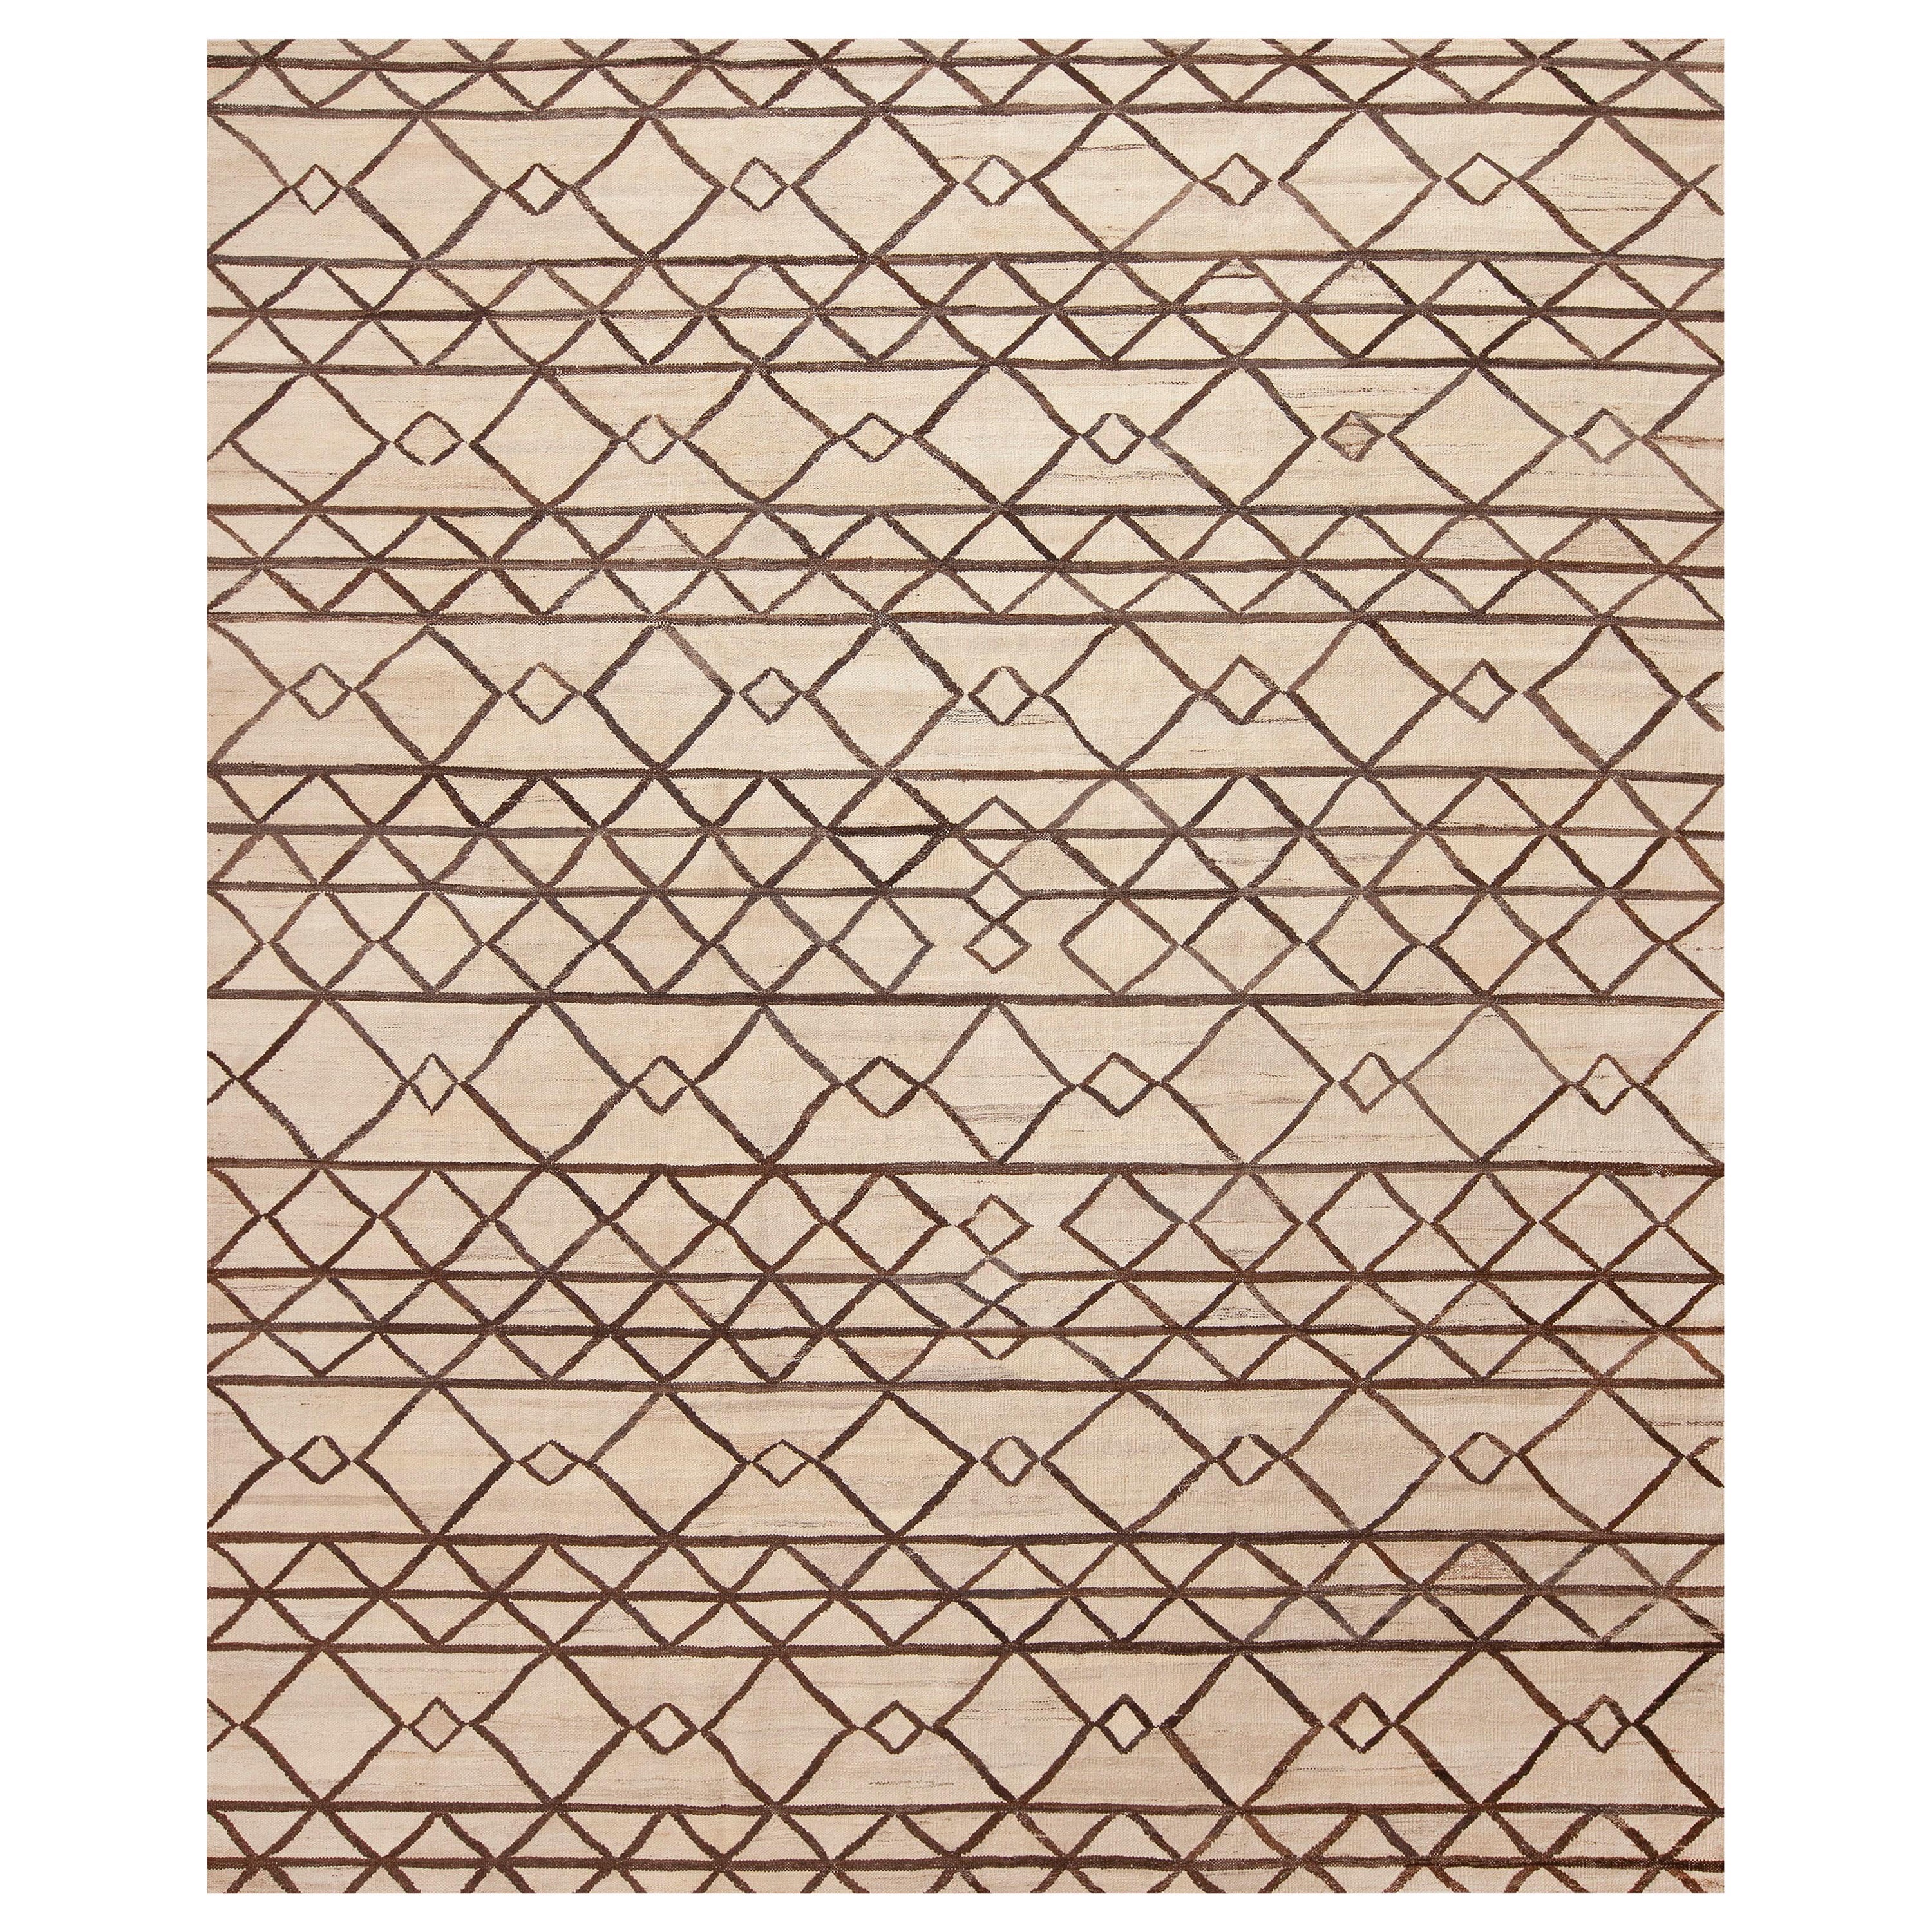 Nazmiyal Collection White And Brown Geometric Modern Area Kilim Rug 9'7" x 11'9